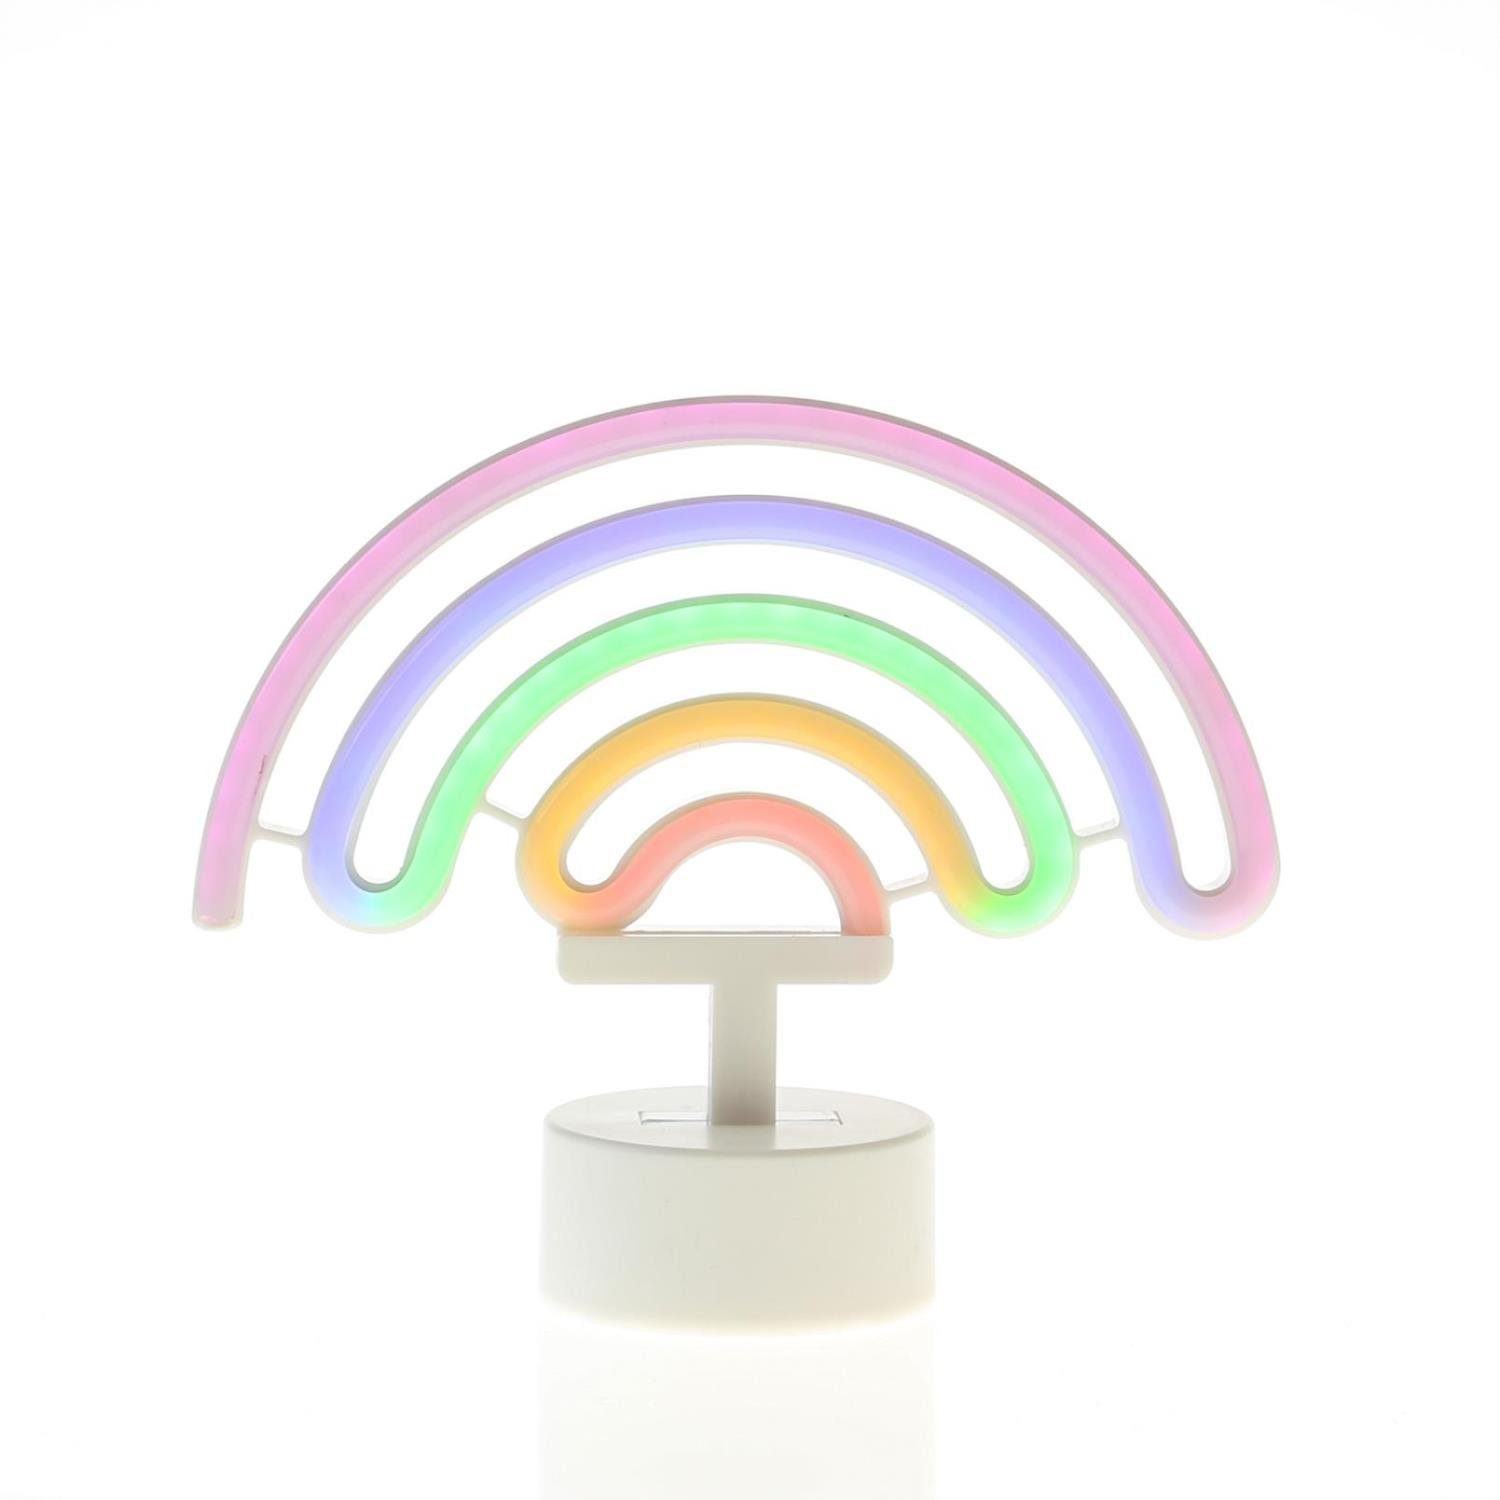 SATISFIRE LED Dekolicht Classic, Leuchtfigur bunt LED Batterie LED mehrfarbig Neonschild bunt, / Neonlicht Regenbogen 19cm USB